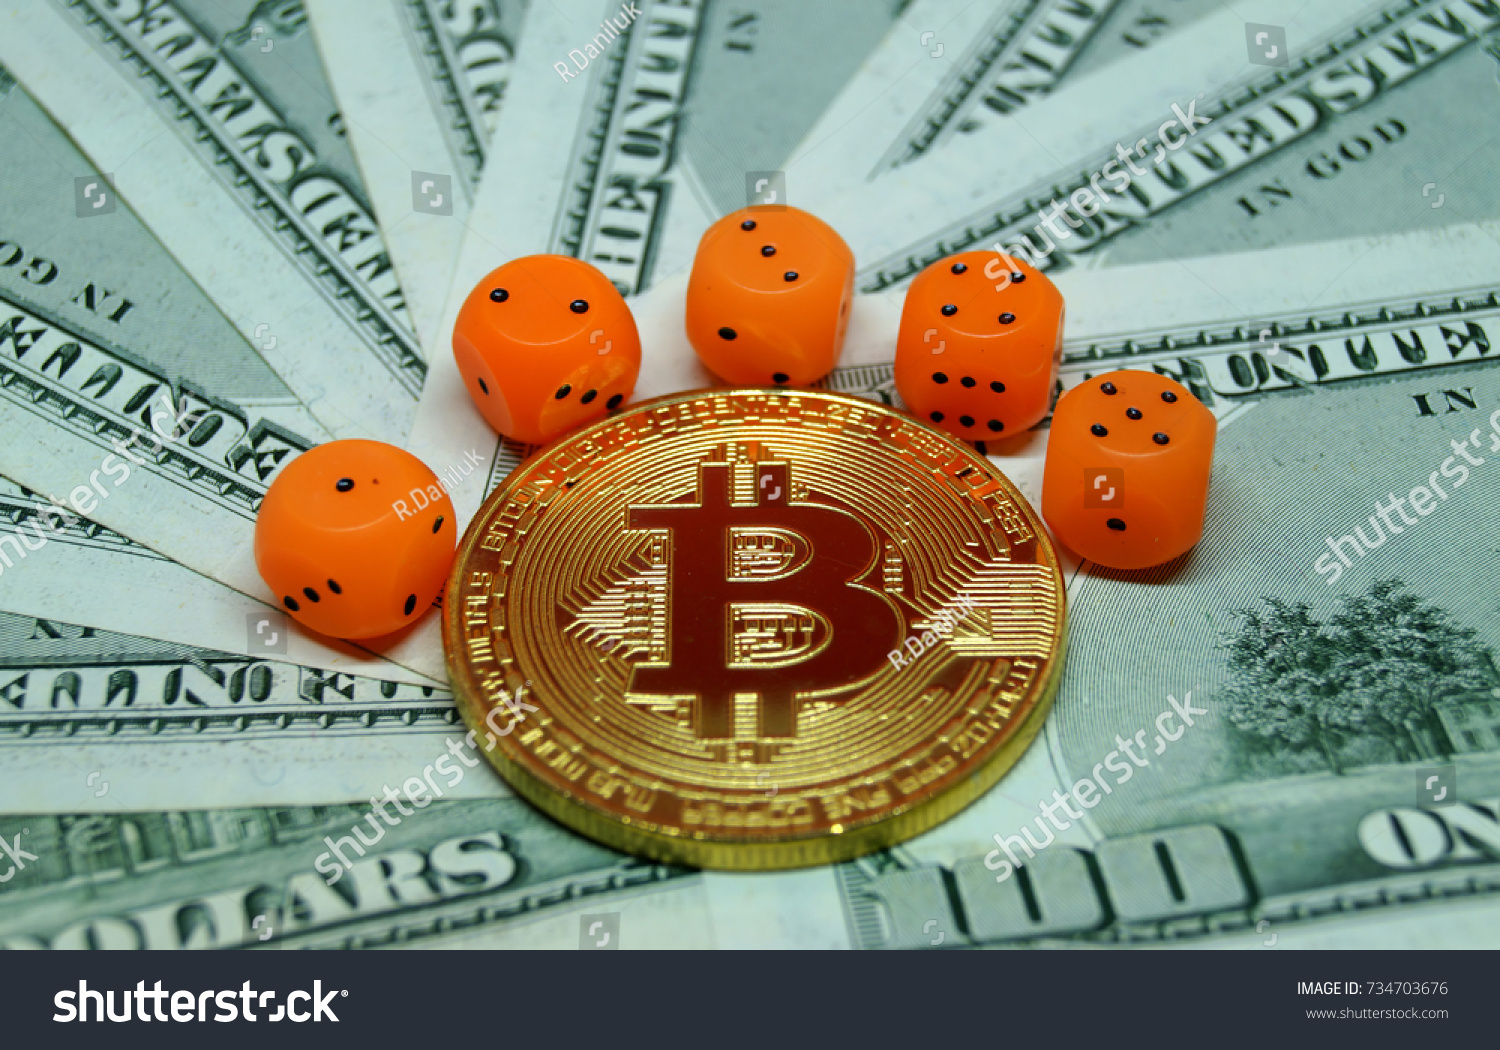 bitcoin dice invest